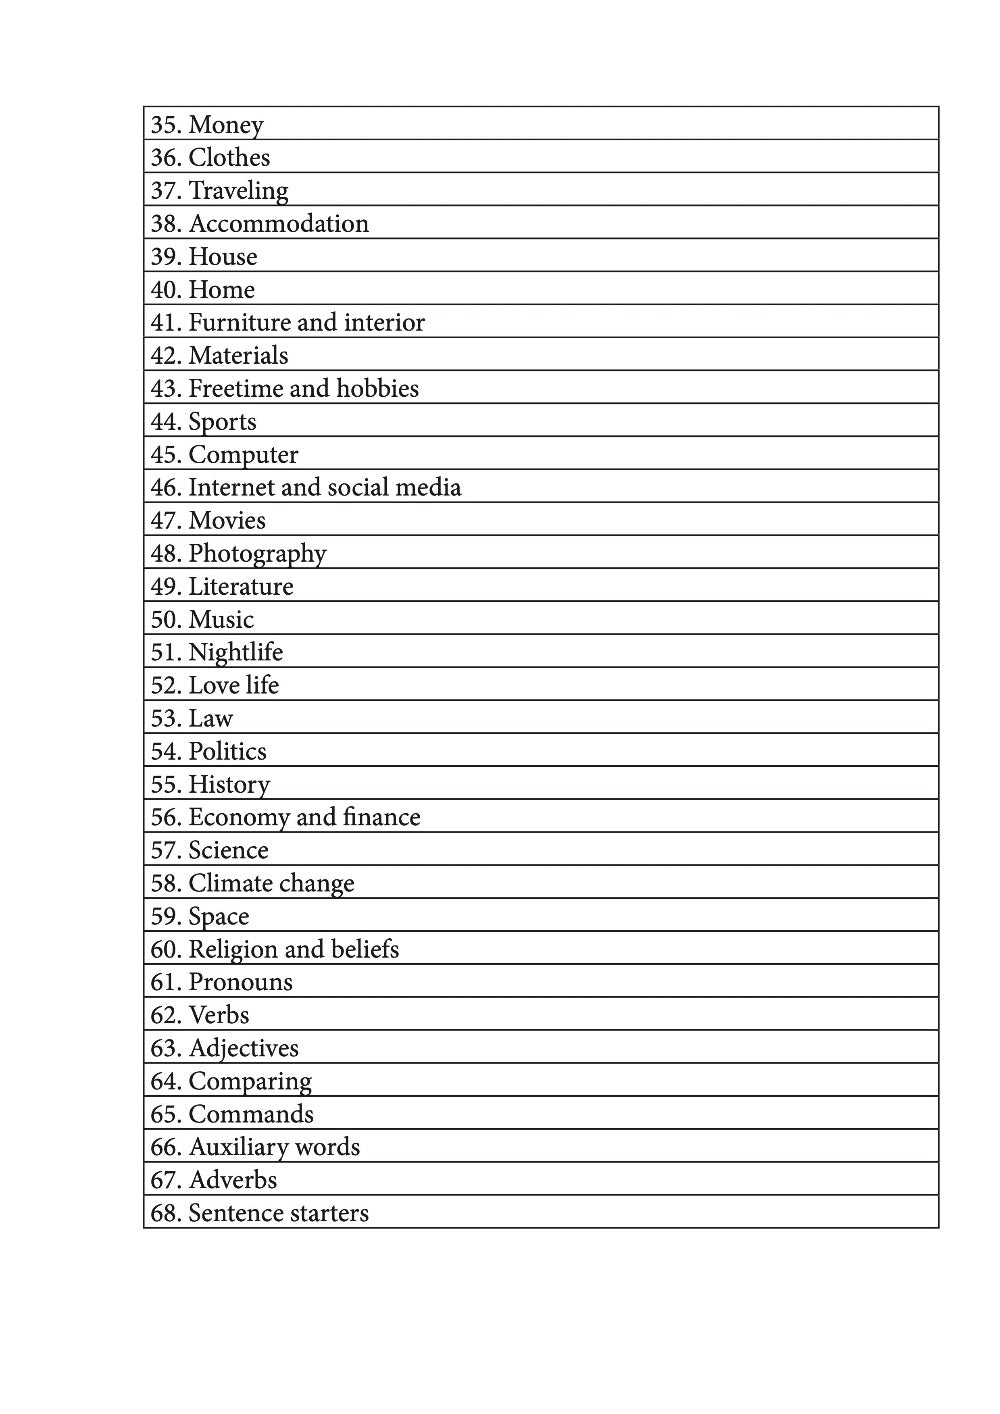 Garifuna language learning notebook contents page 2